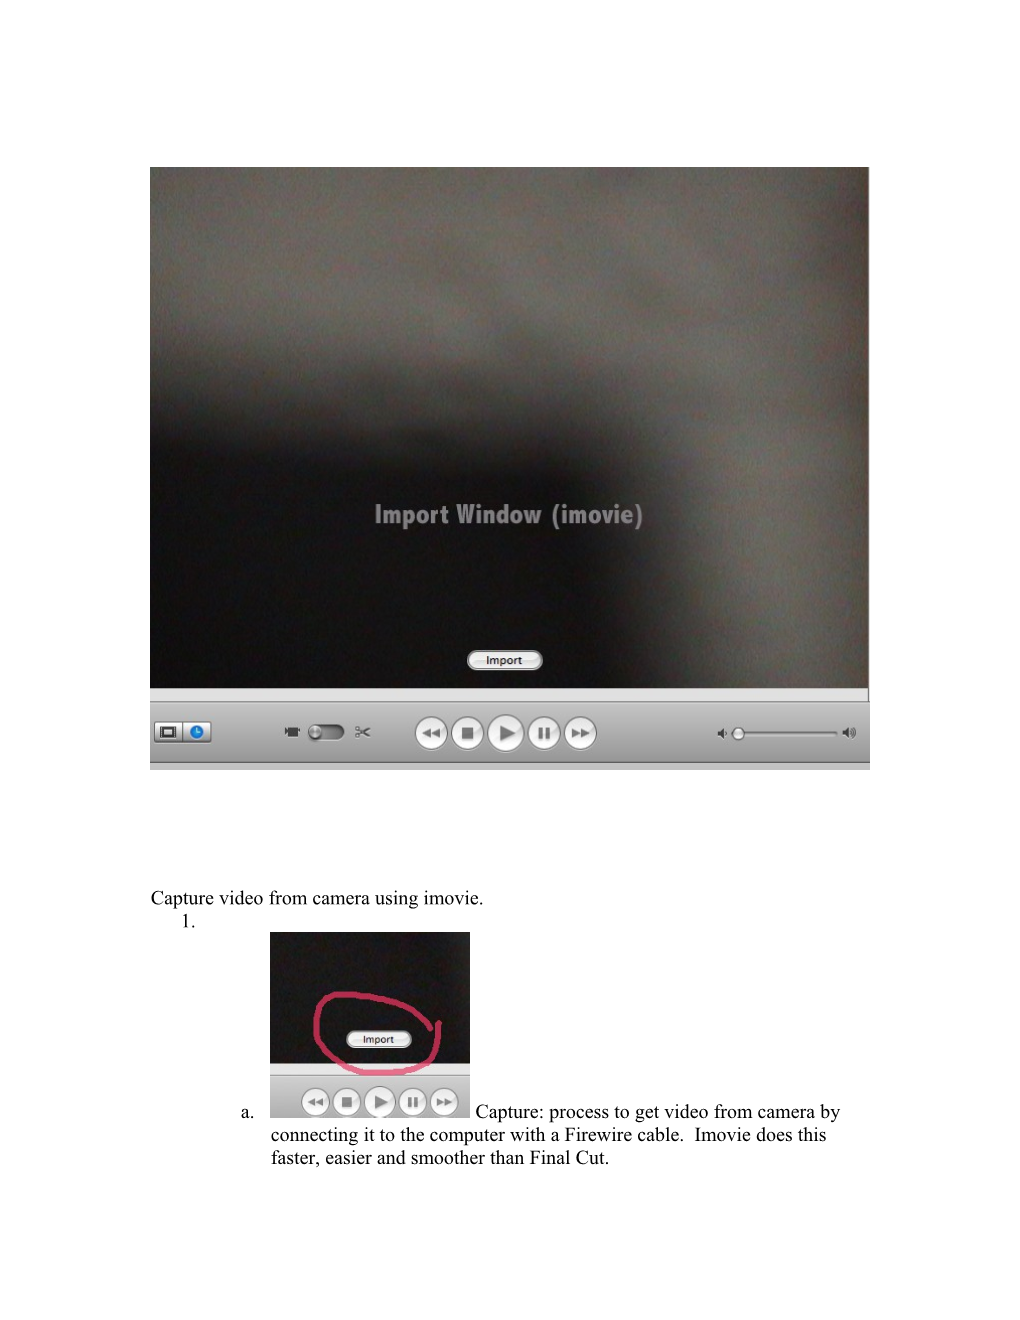 Capture Video from Camera Using Imovie